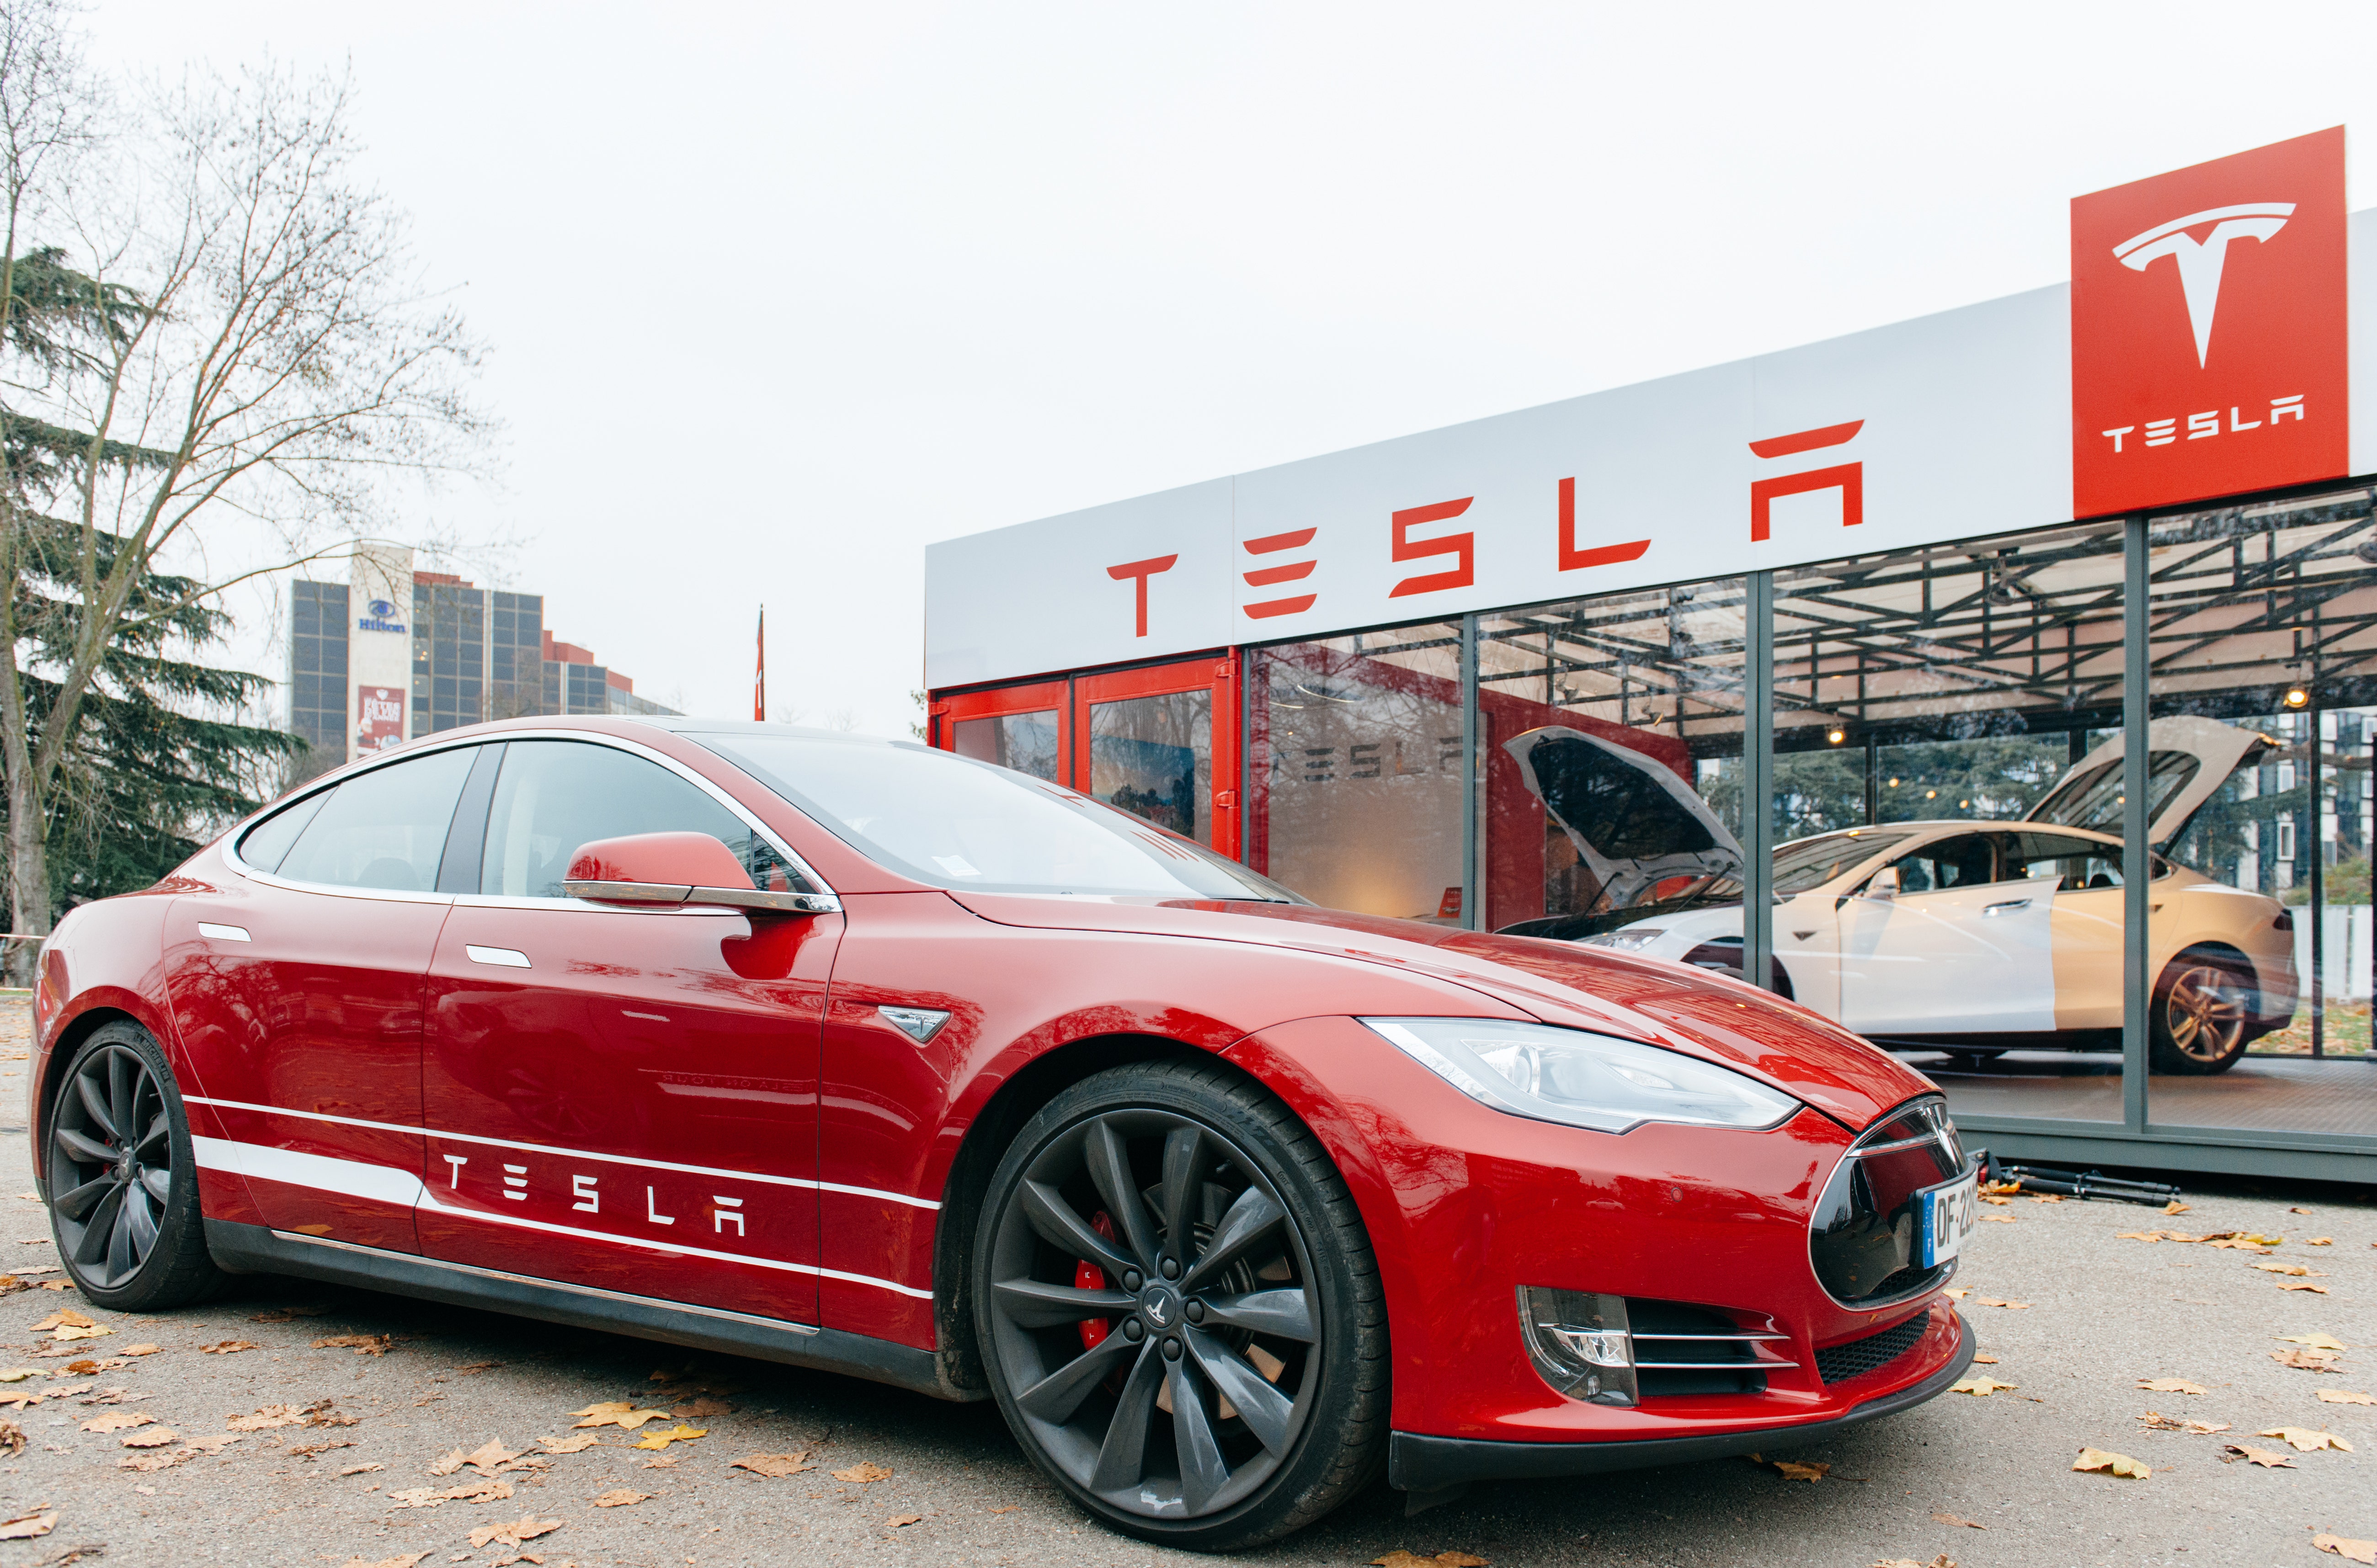 Tesla September China Sales Hit Record-High Despite Overall Q3 Softness: CPCA Data